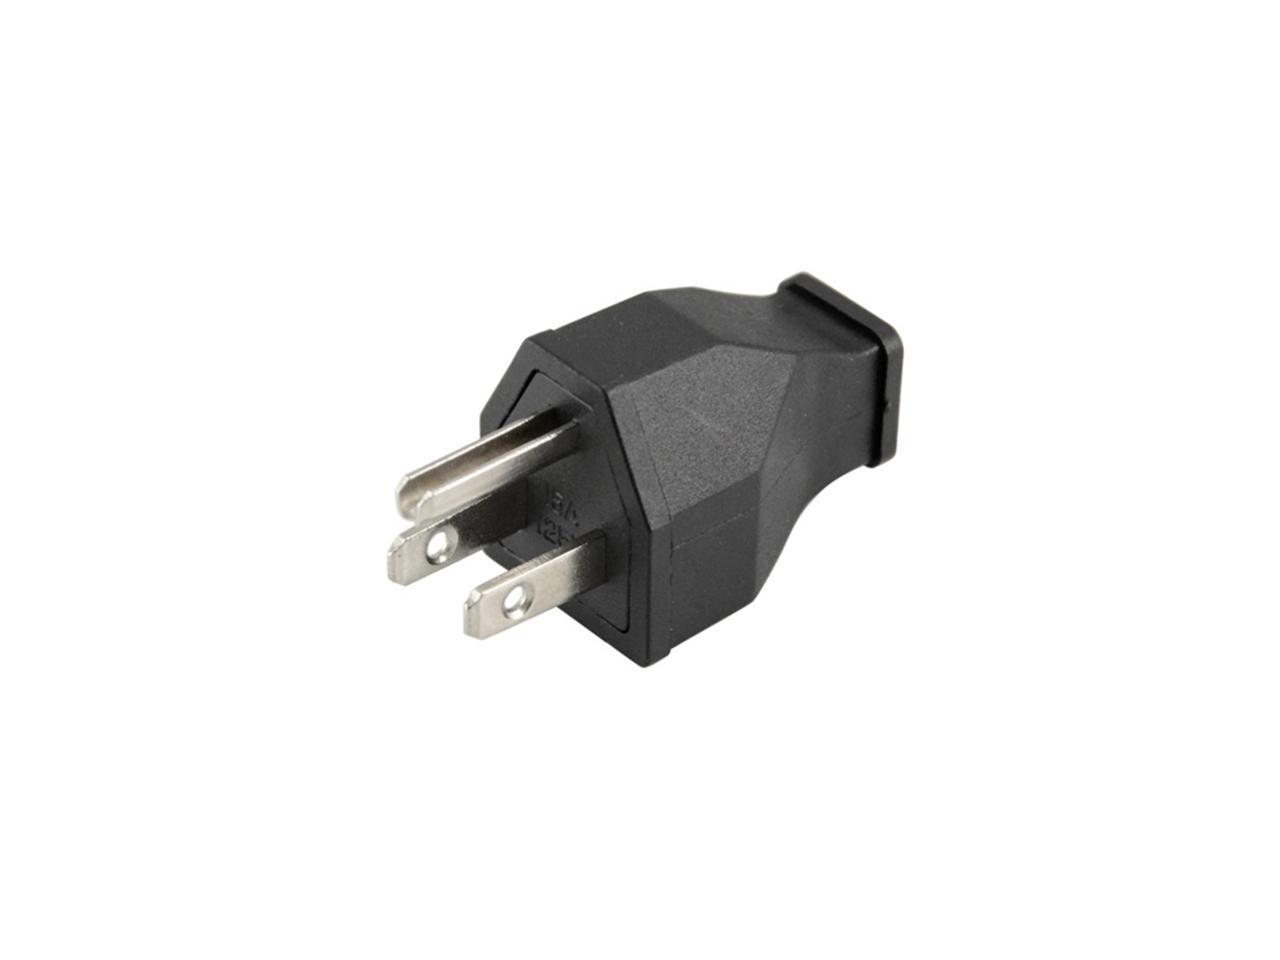 Black Adapter Electrical Socket Wall Plug 3 Pins Converter Standard Grounding 5A